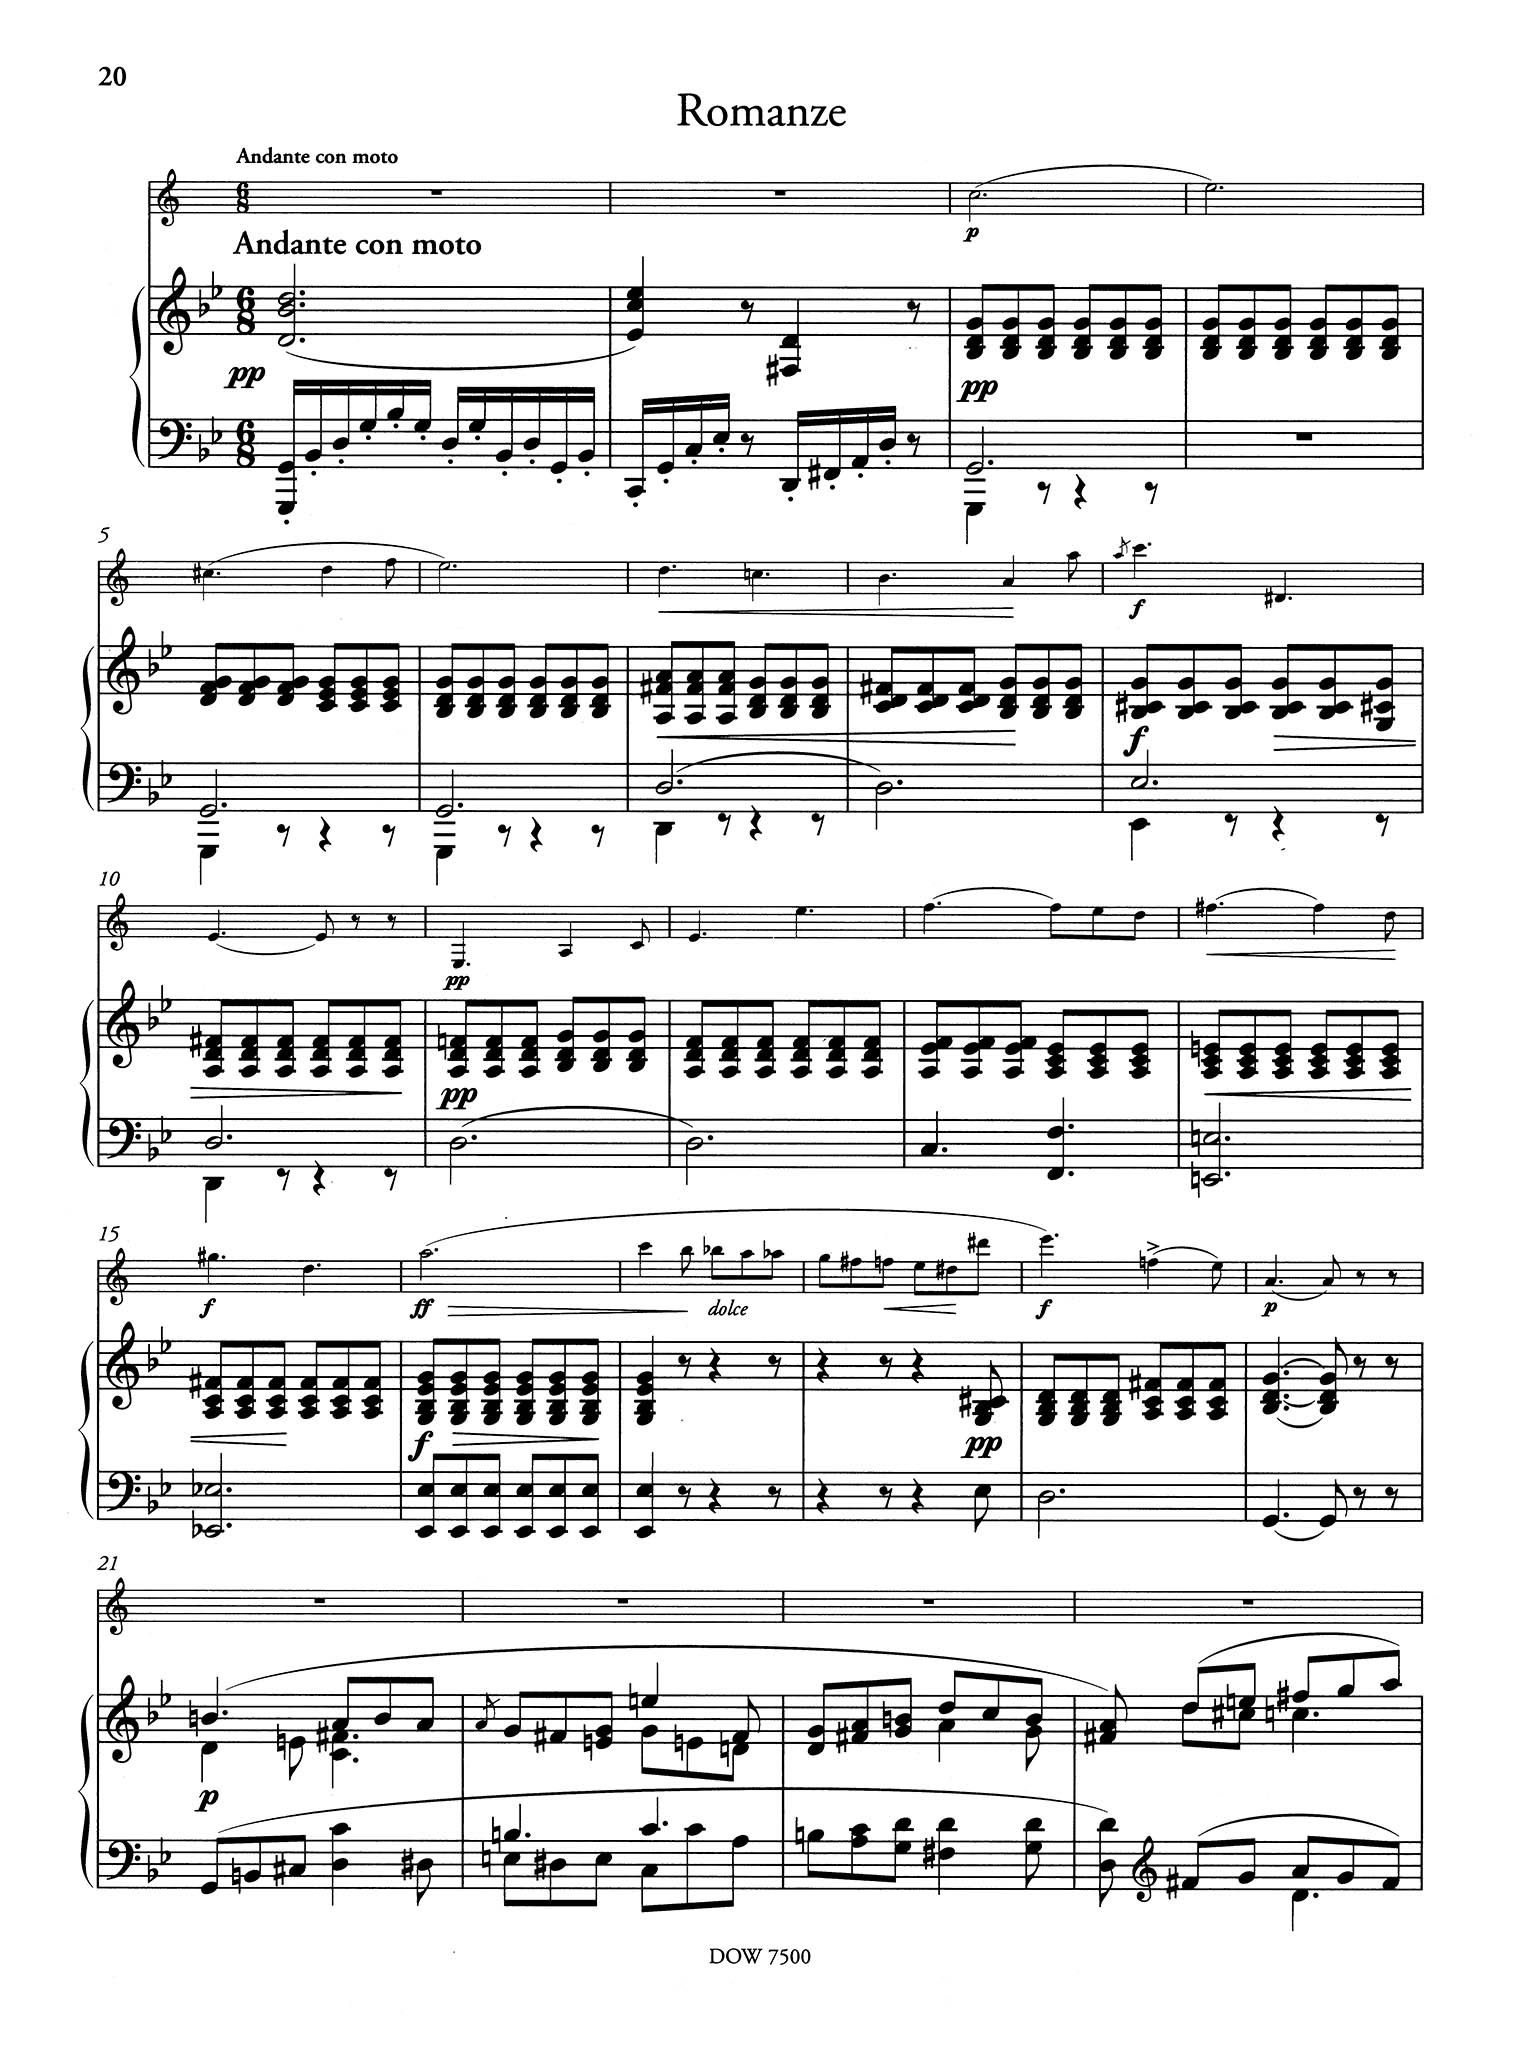 Clarinet Concerto No. 2 in E-flat Major, Op. 74 - Movement 2